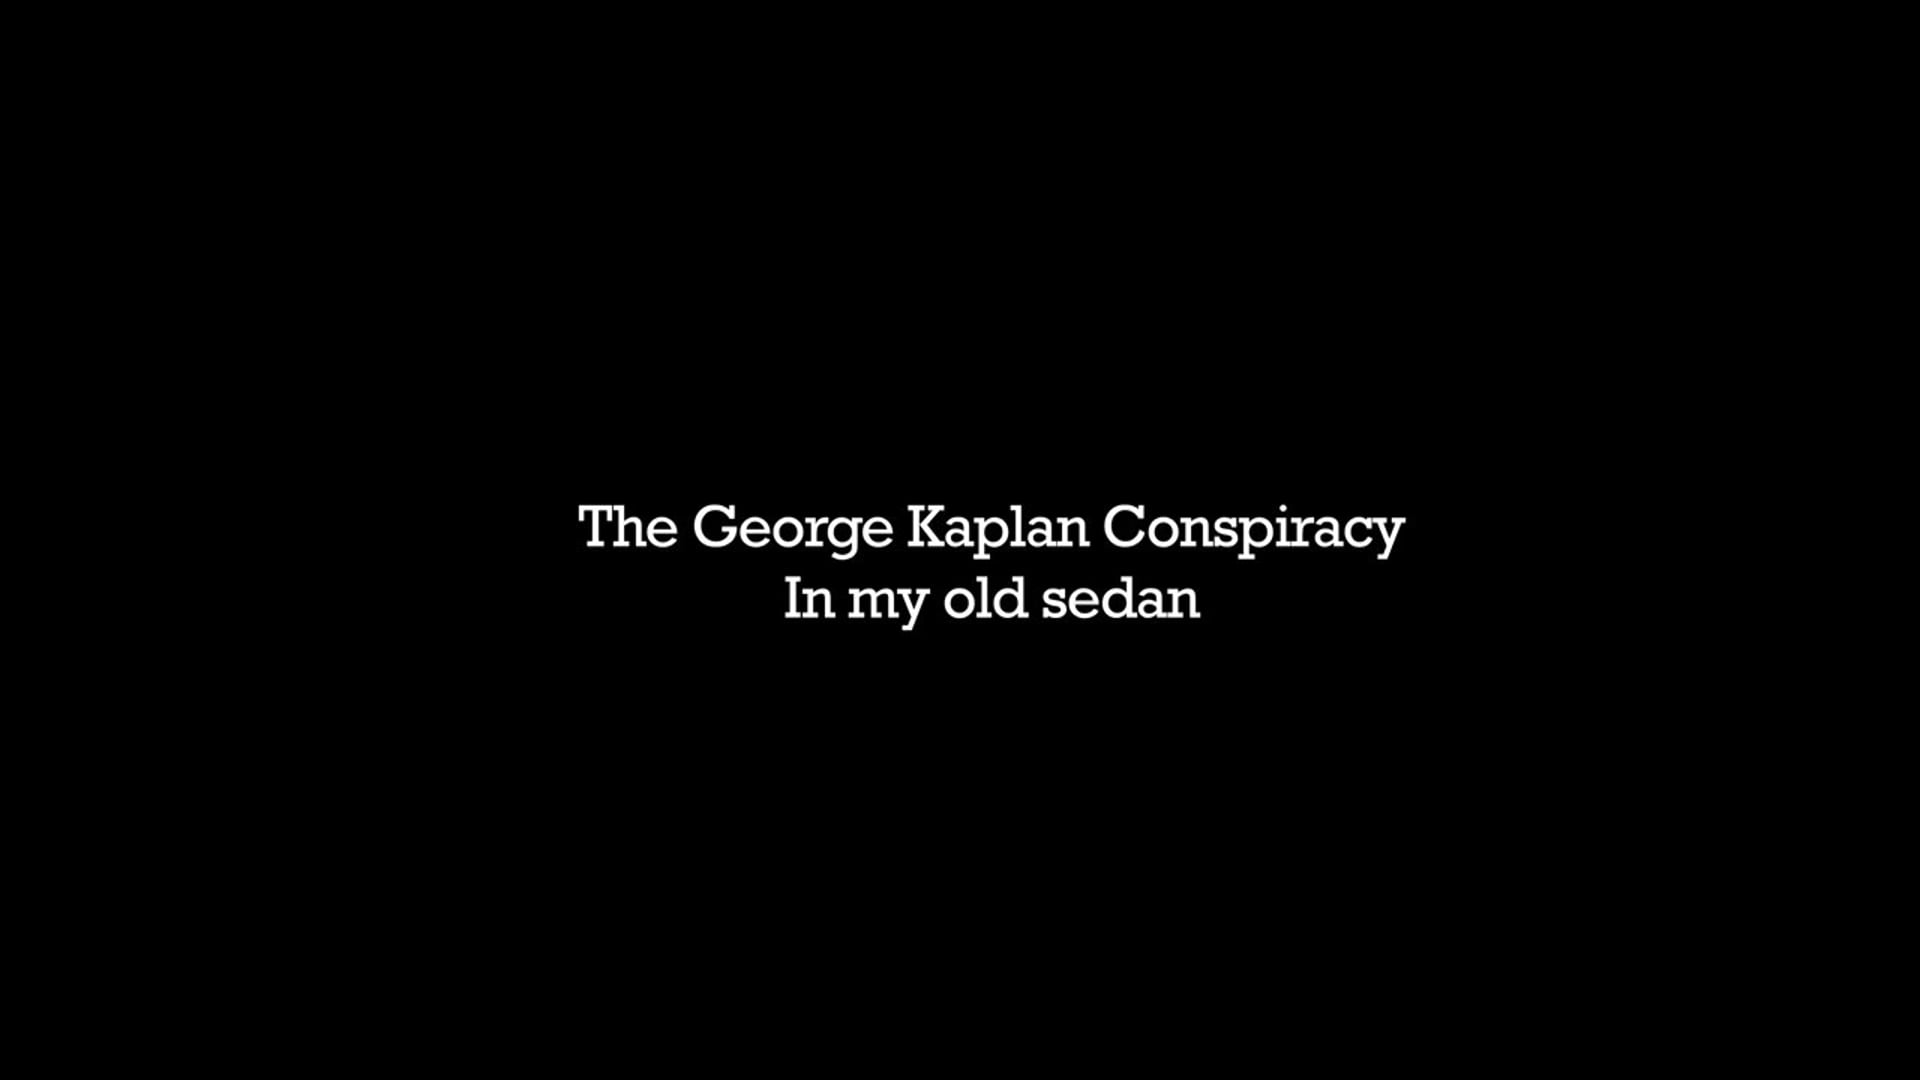 The George Kaplan Conspiracy in my old Sedan